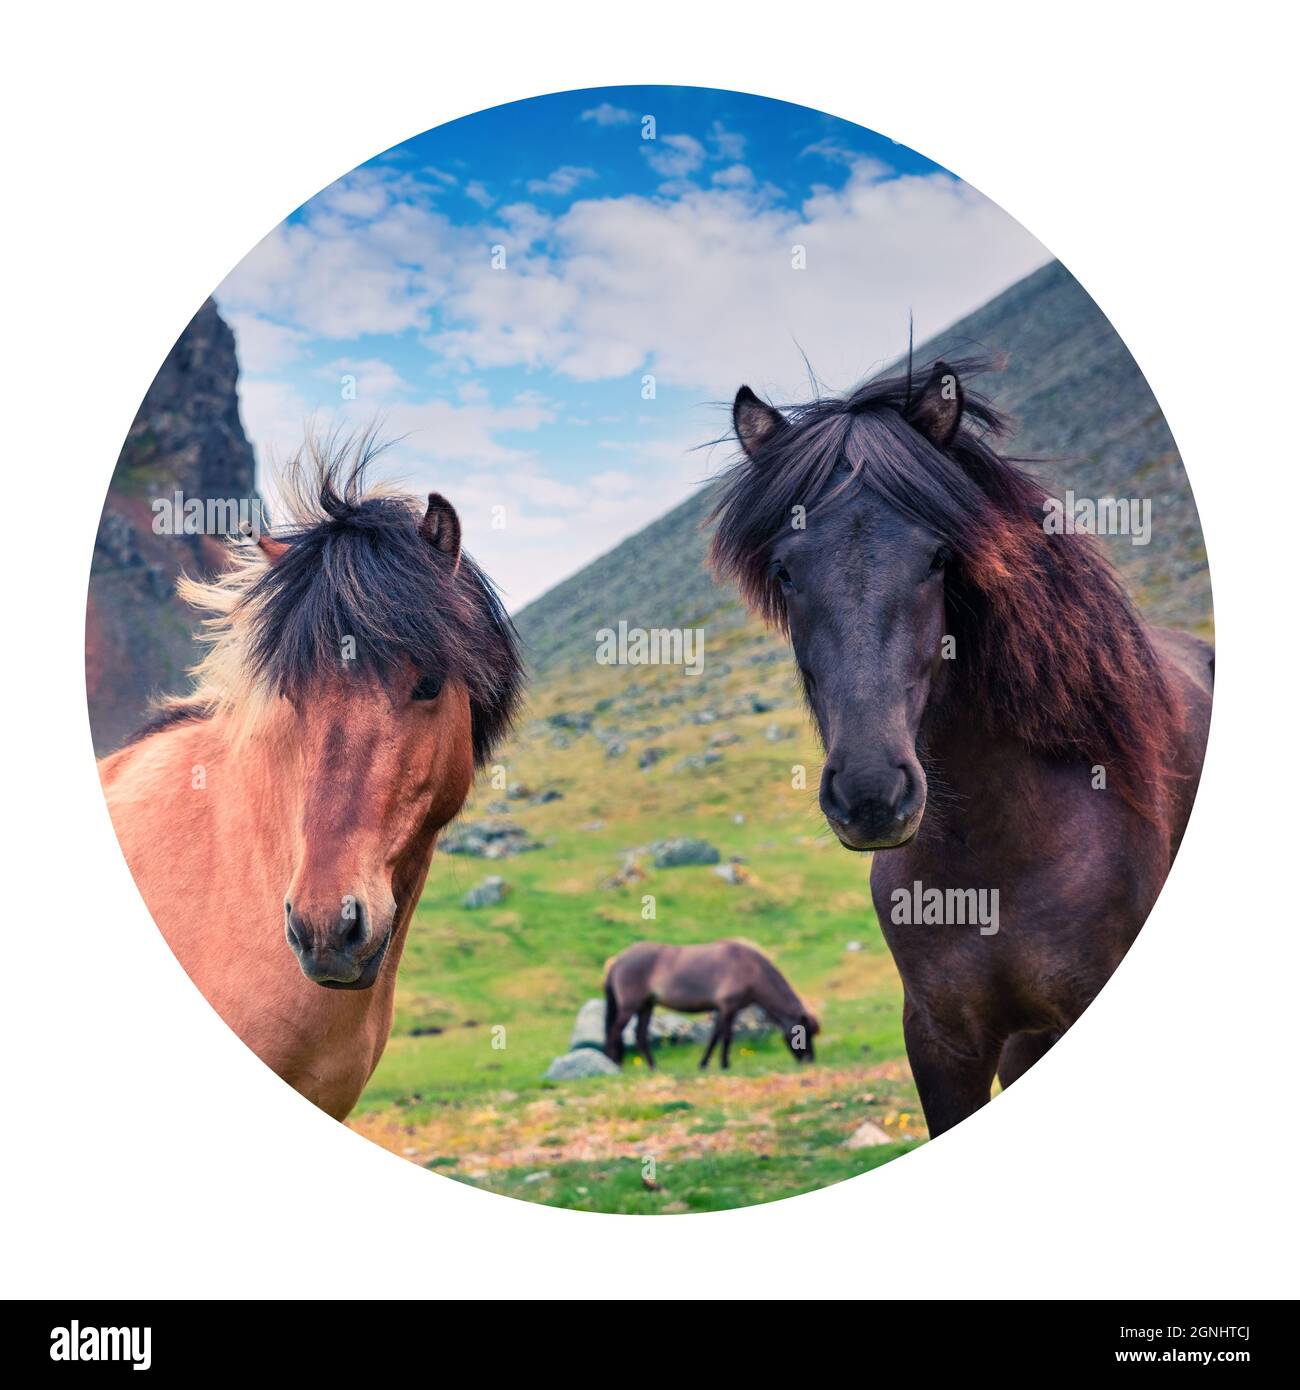 Round icon of horses. Developed from ponies - Icelandic horses. Colorful summer scene of mountain pasture, Stokksnes headland, Iceland, Europe. Photog Stock Photo